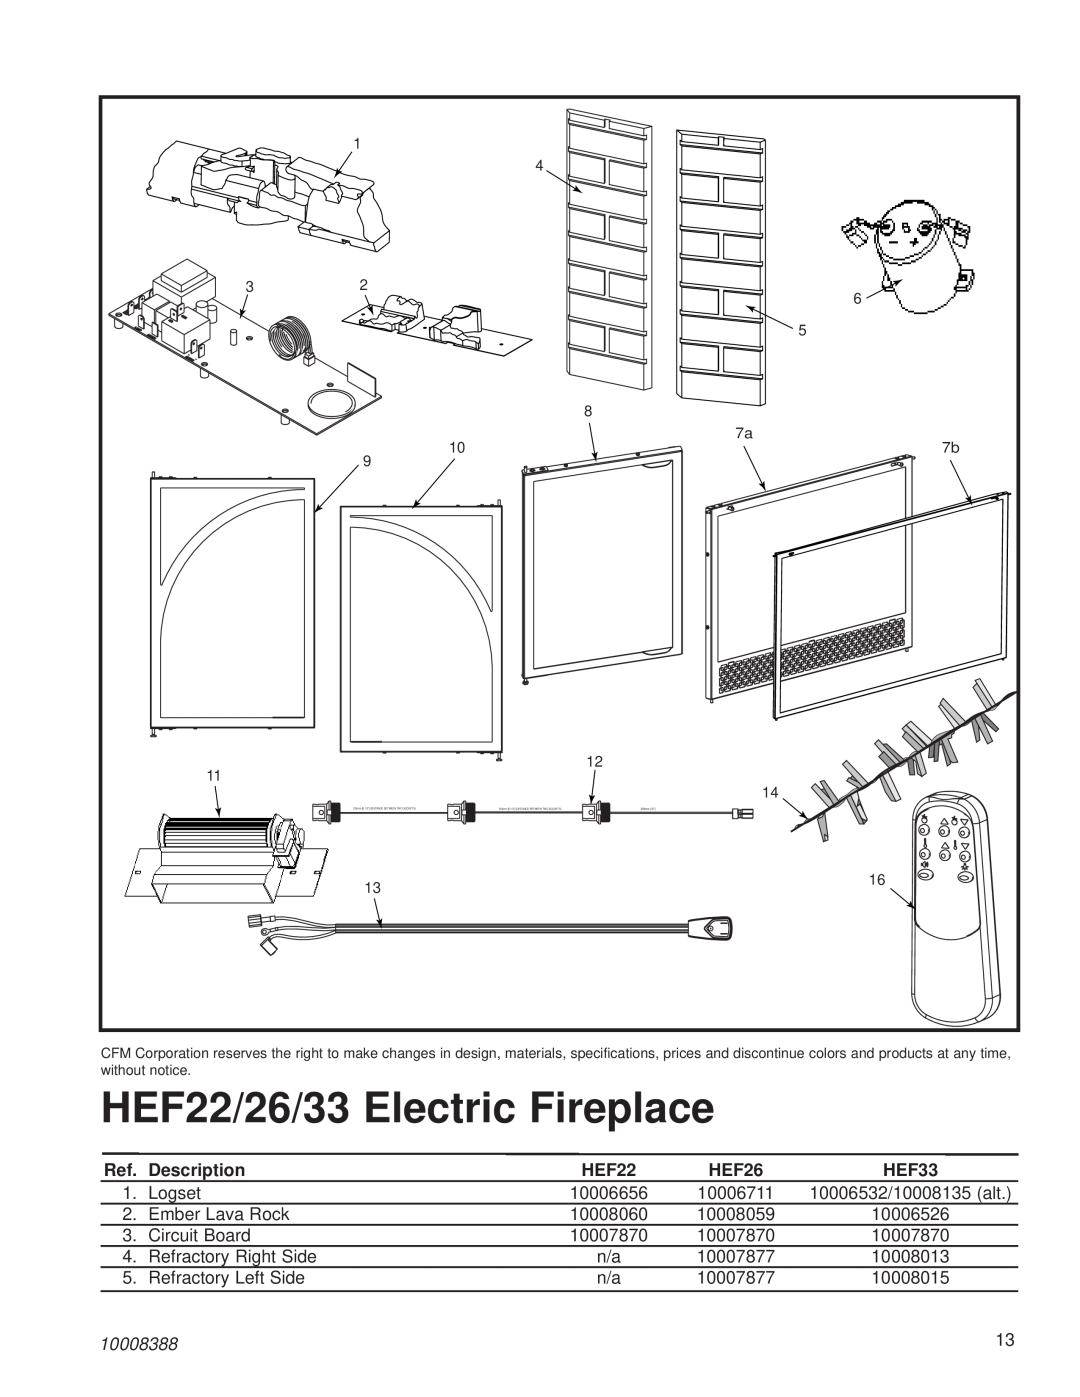 CFM Corporation installation instructions HEF22/26/33 Electric Fireplace, Description, HEF26, HEF33, 10008388 